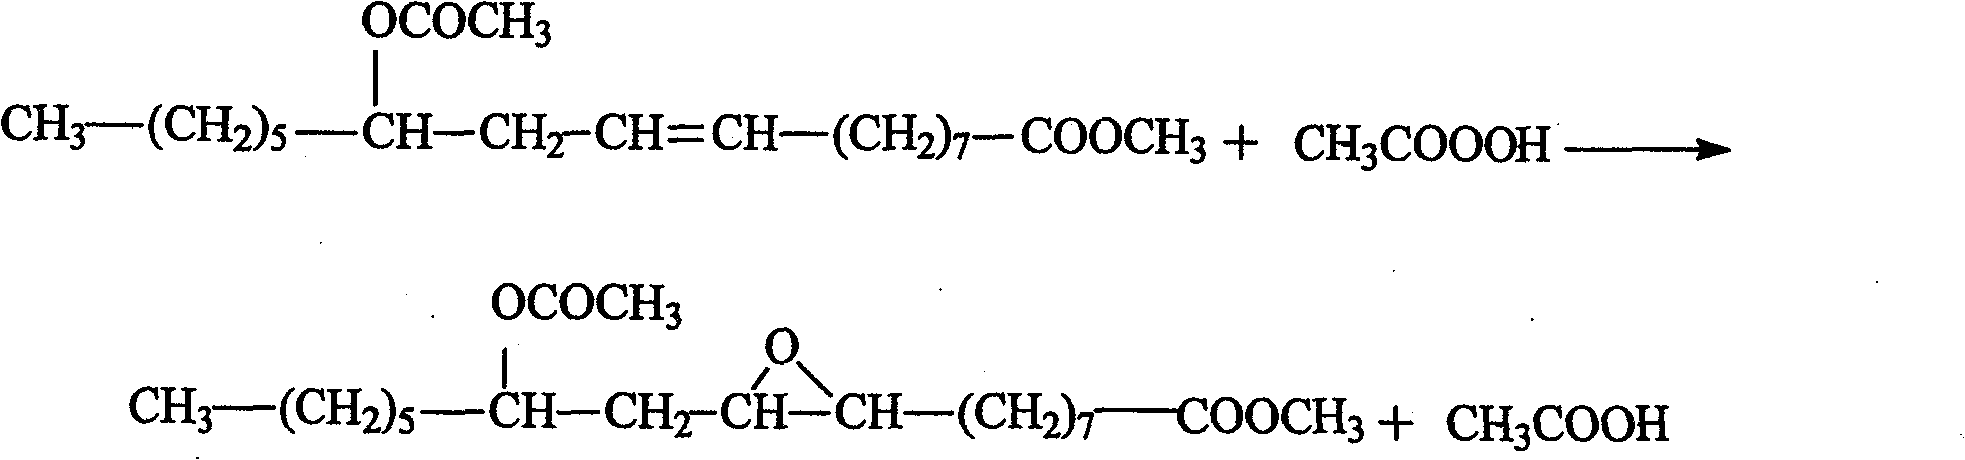 Method for preparing epoxidized methyl acetorieinoleate